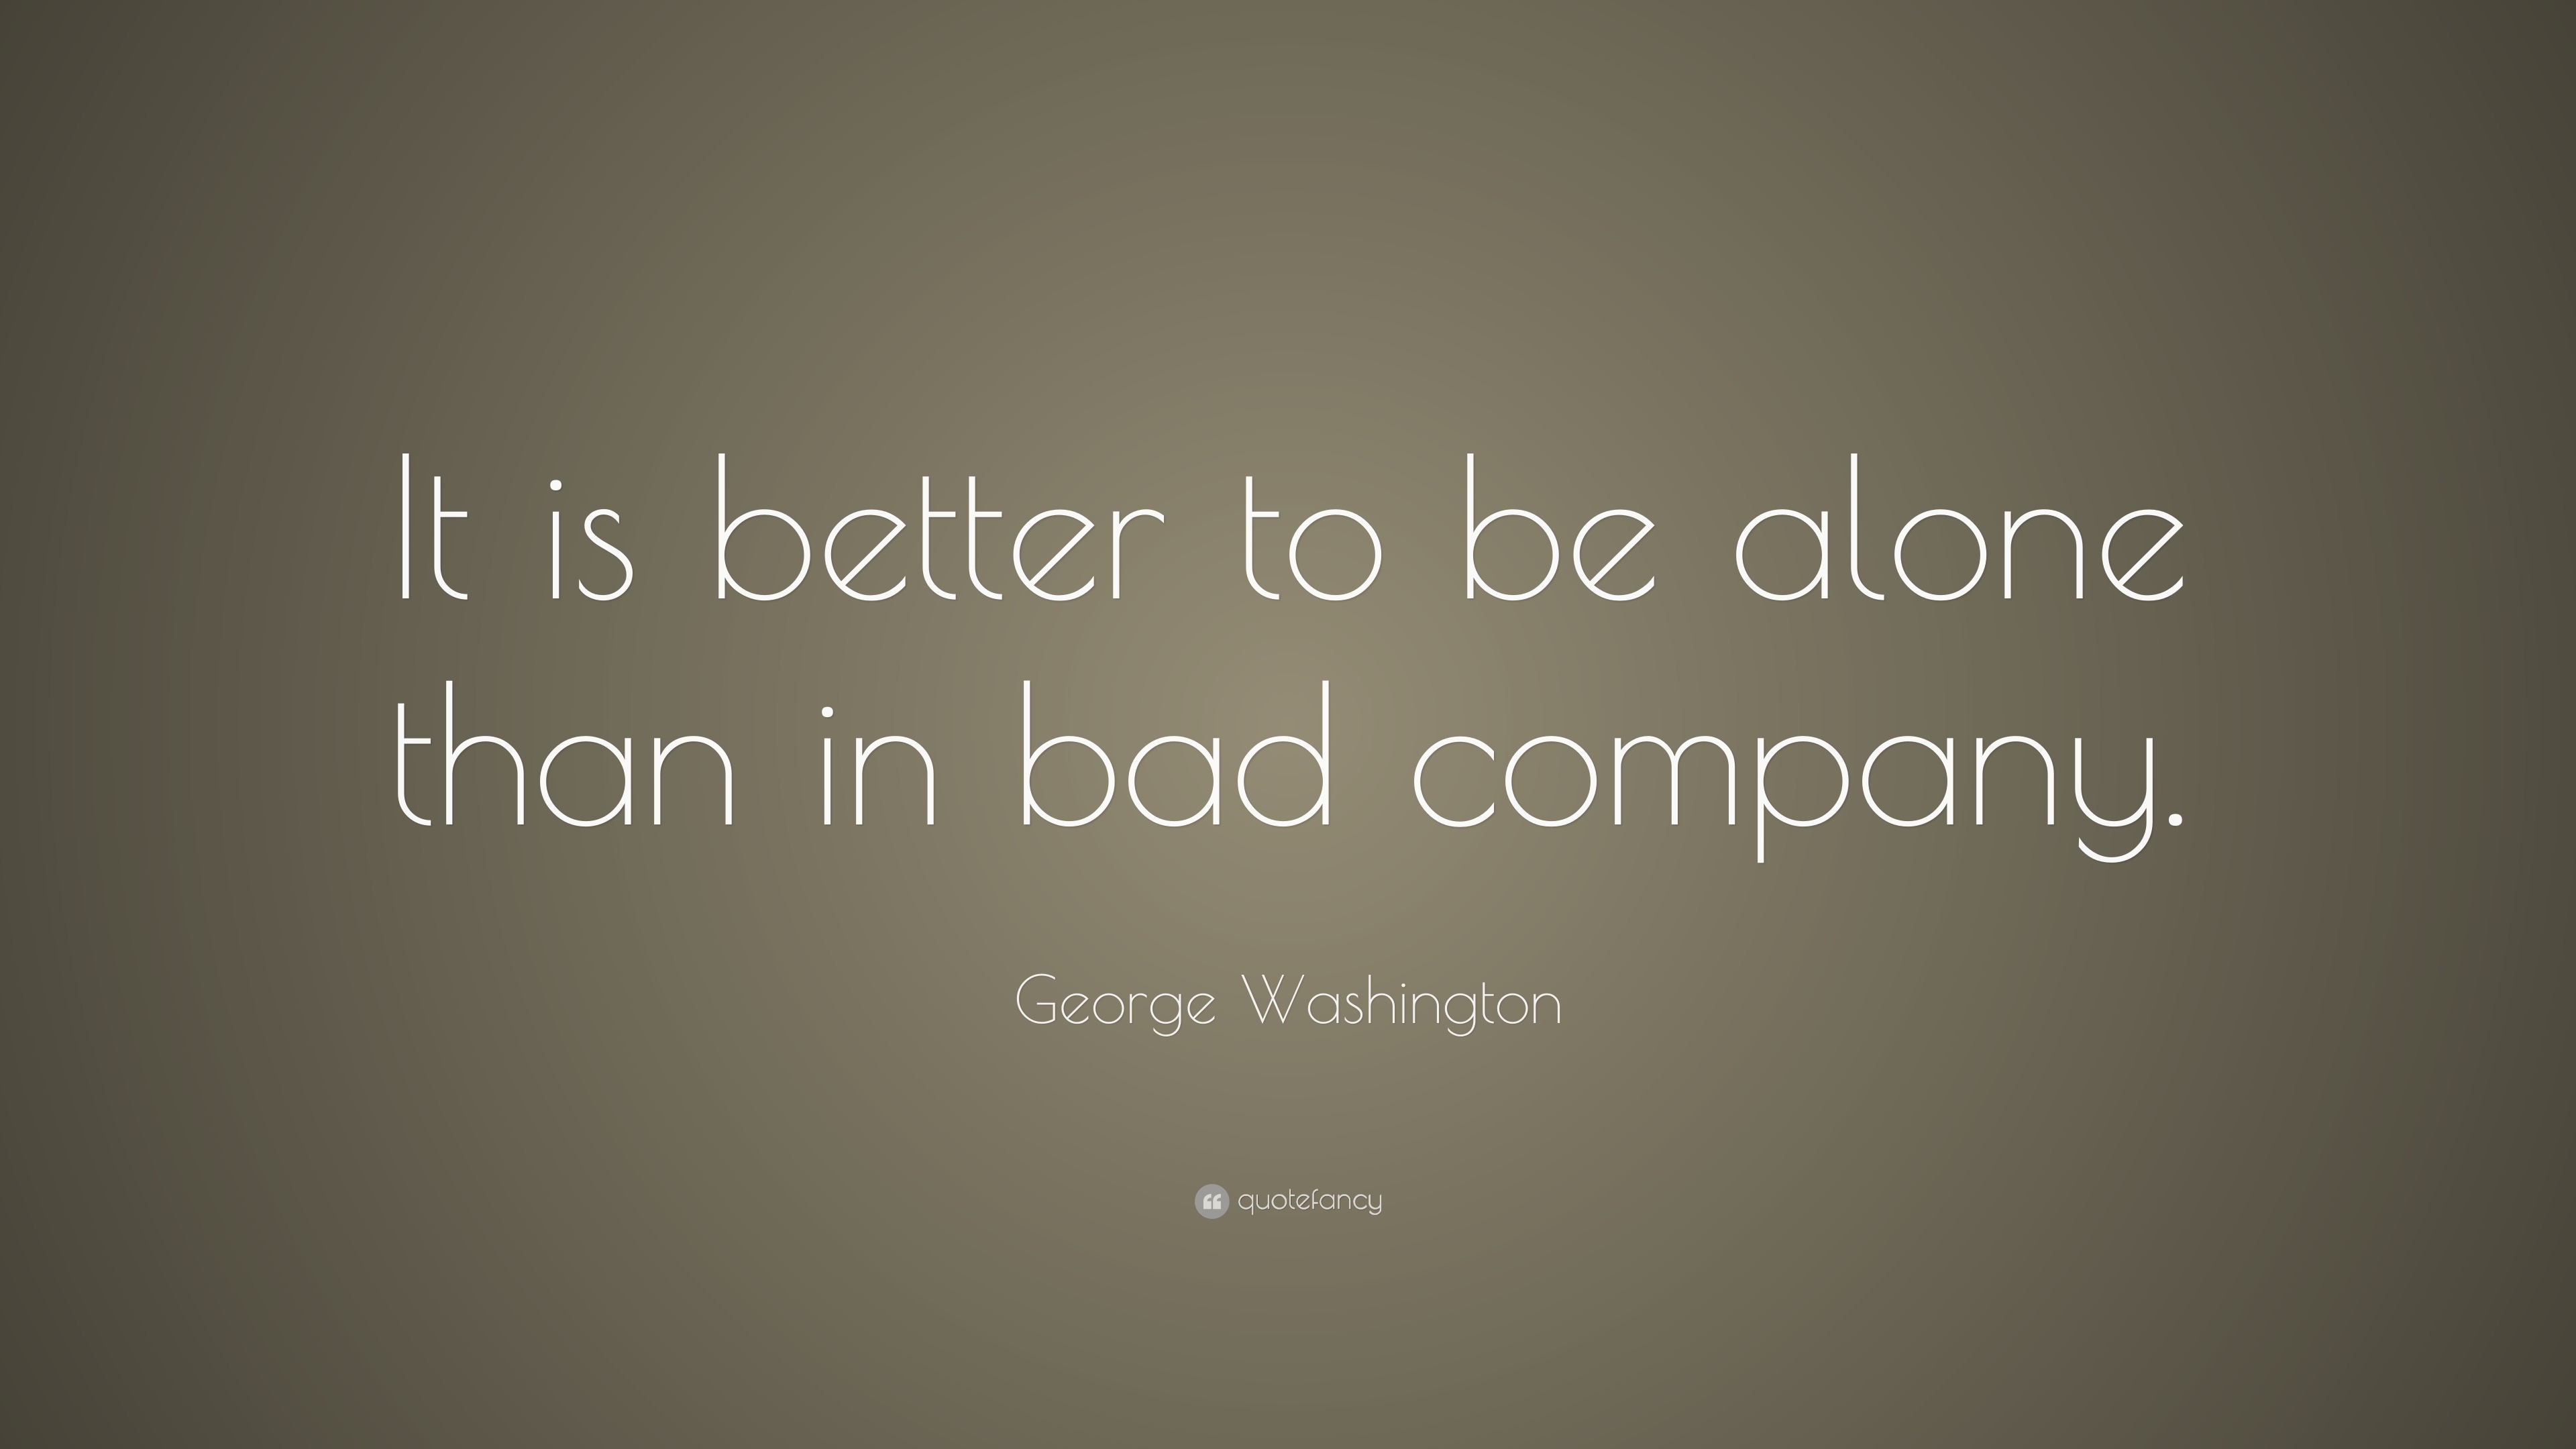 George Washington Quote: 